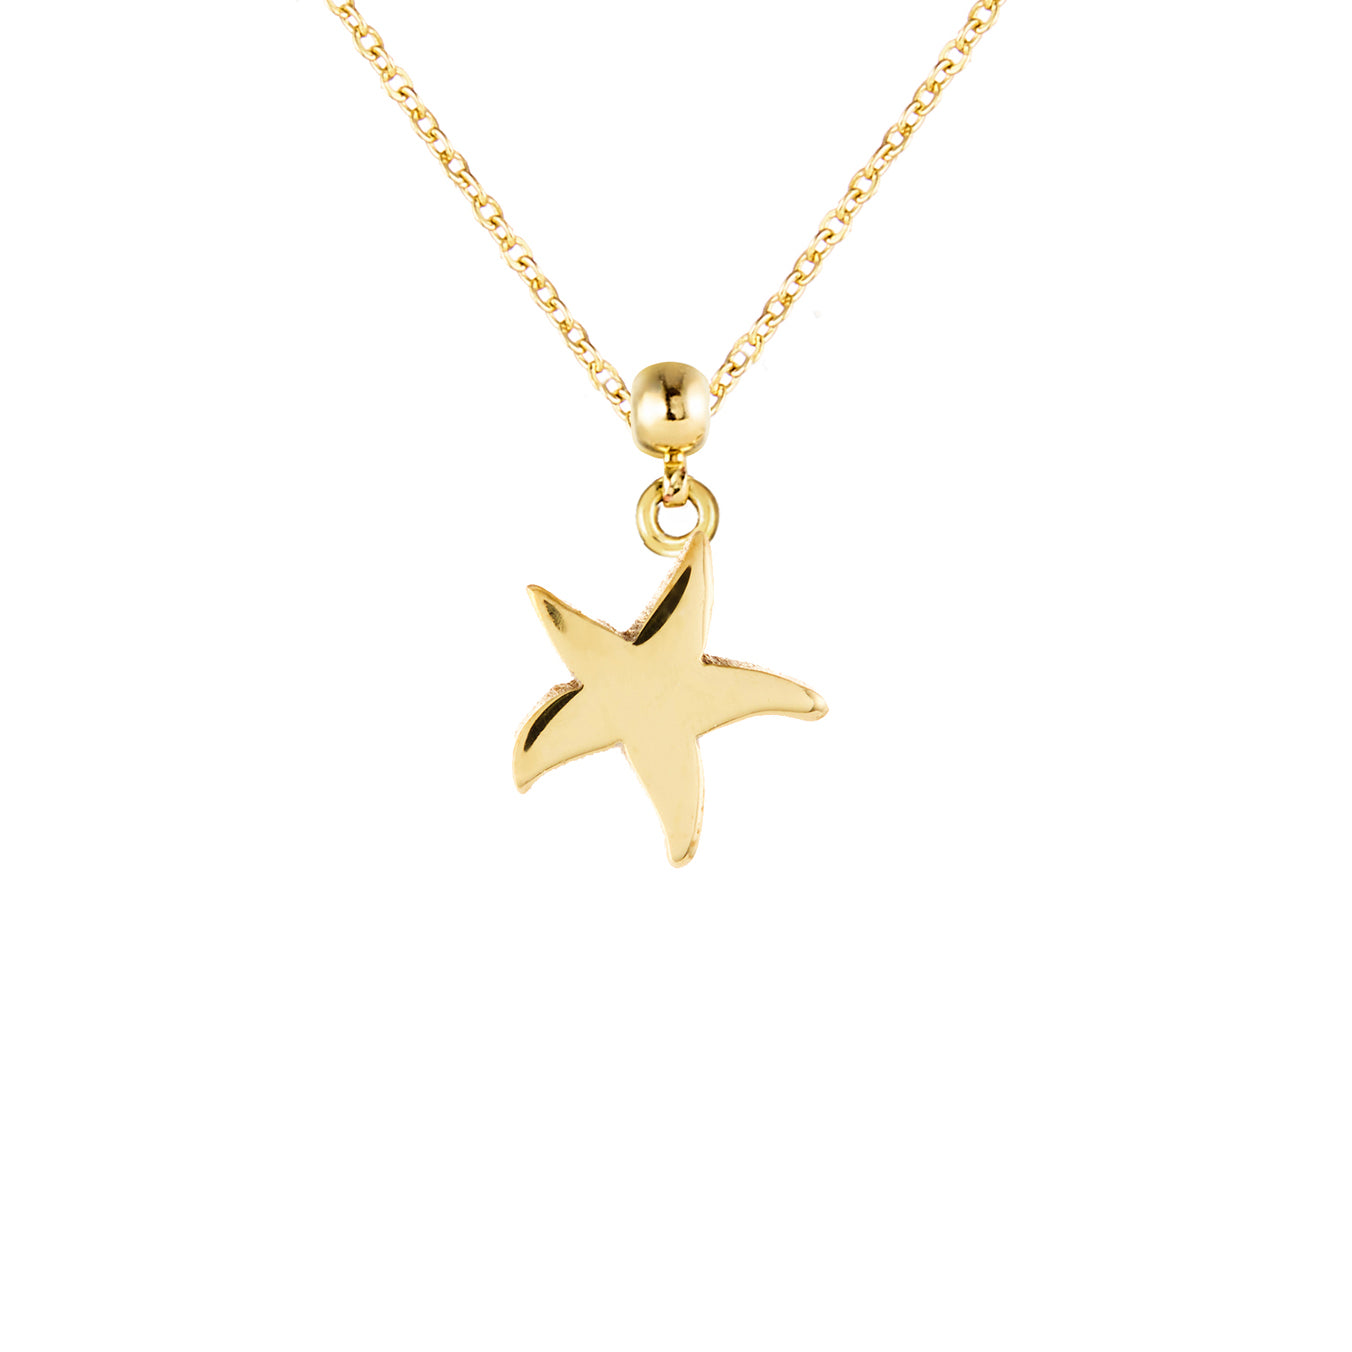 Starfish Brass Charm